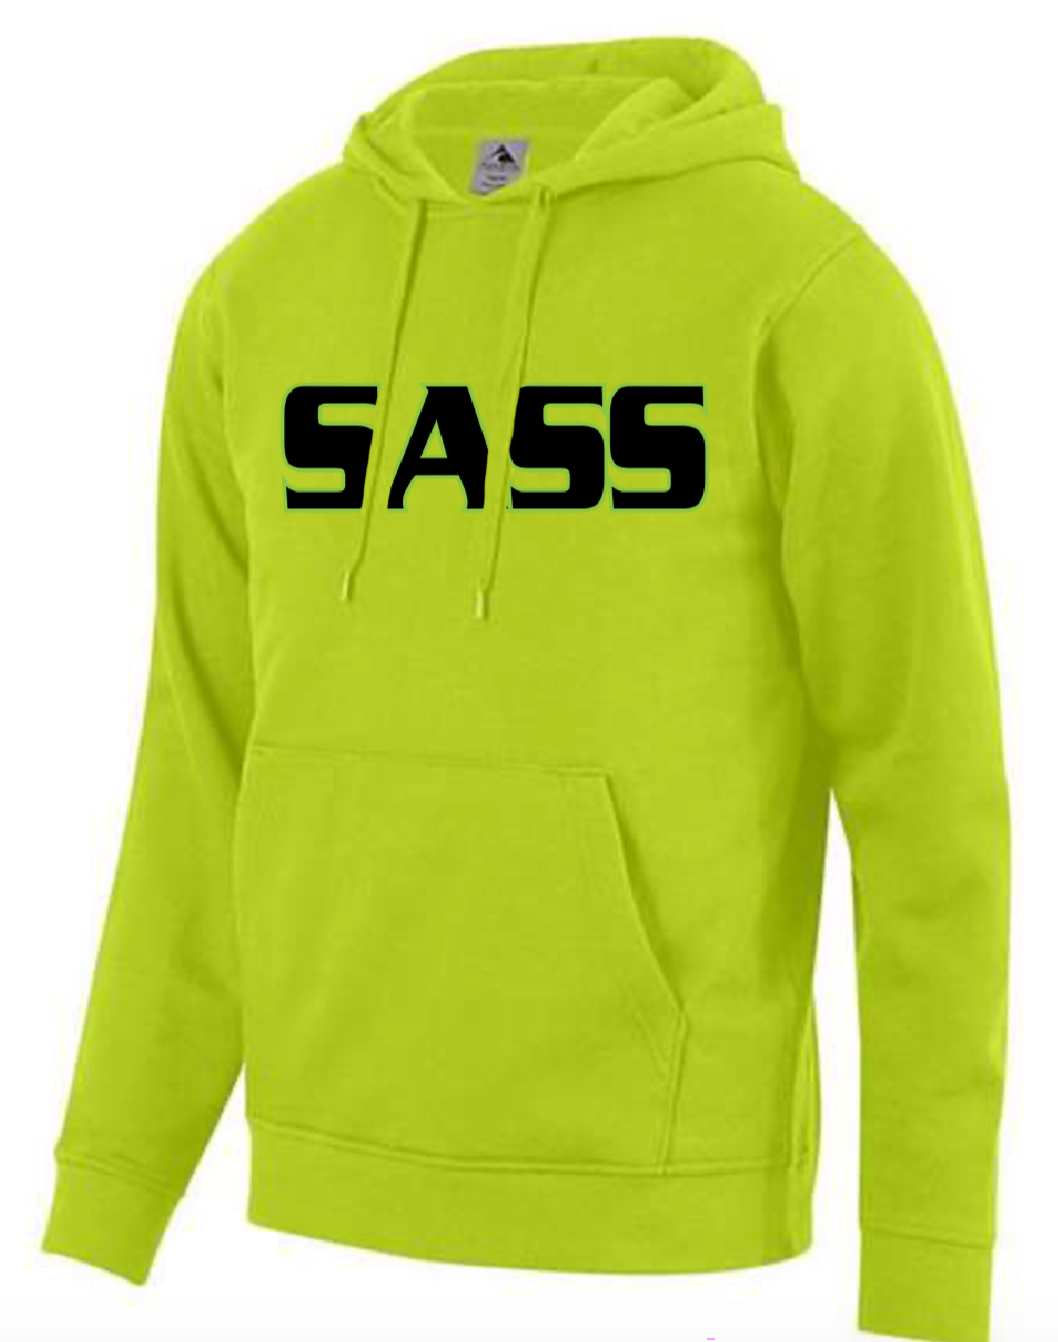 Sass Word Logo Hoodie